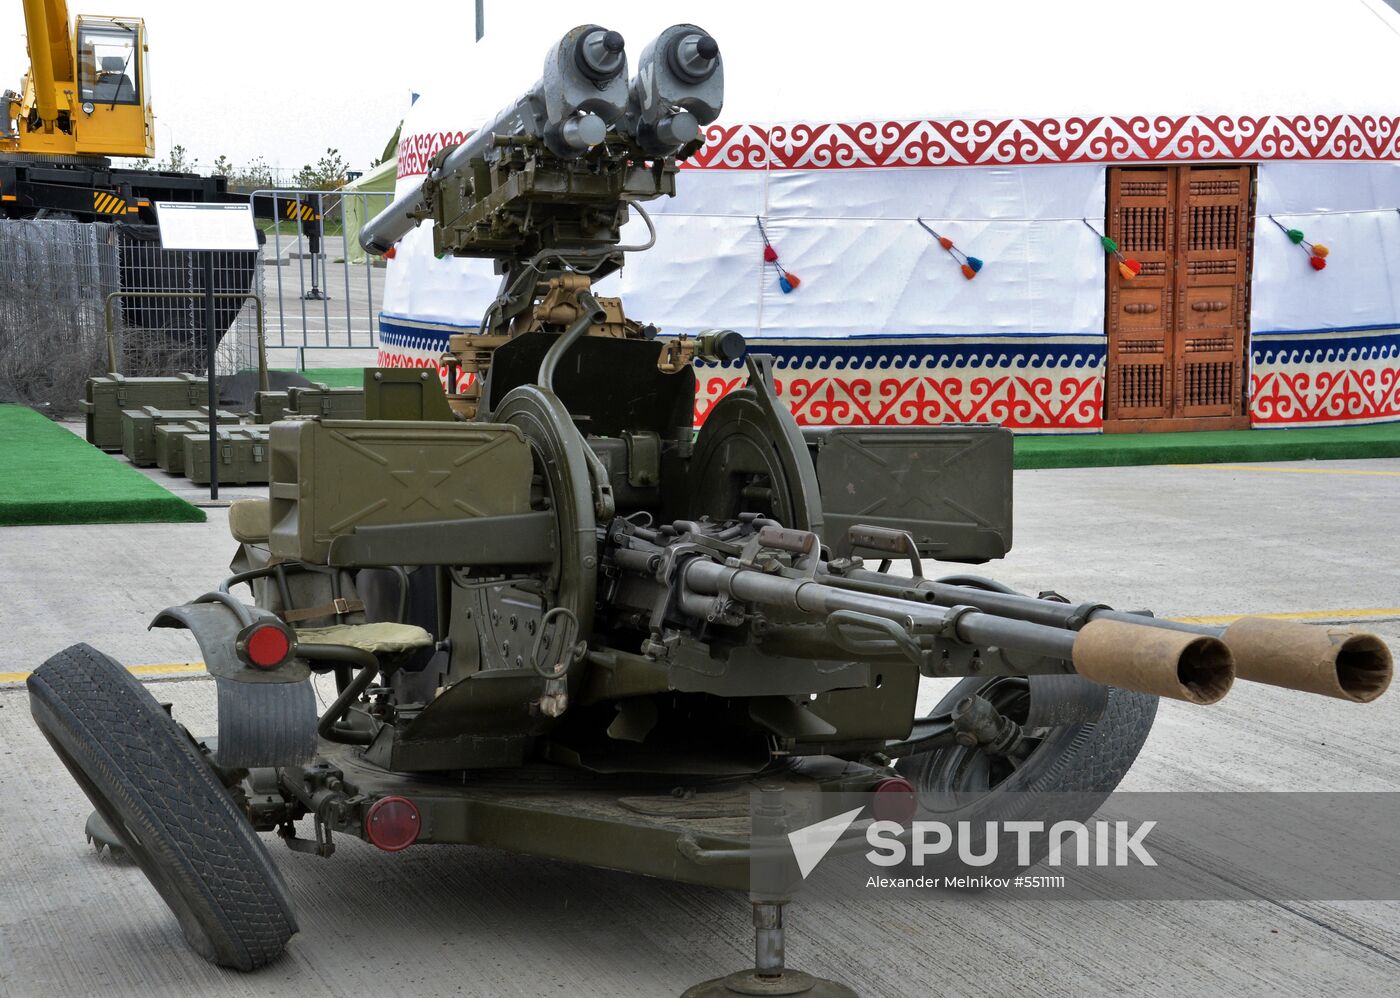 KADEX 2018 international weapons exhibition in Astana